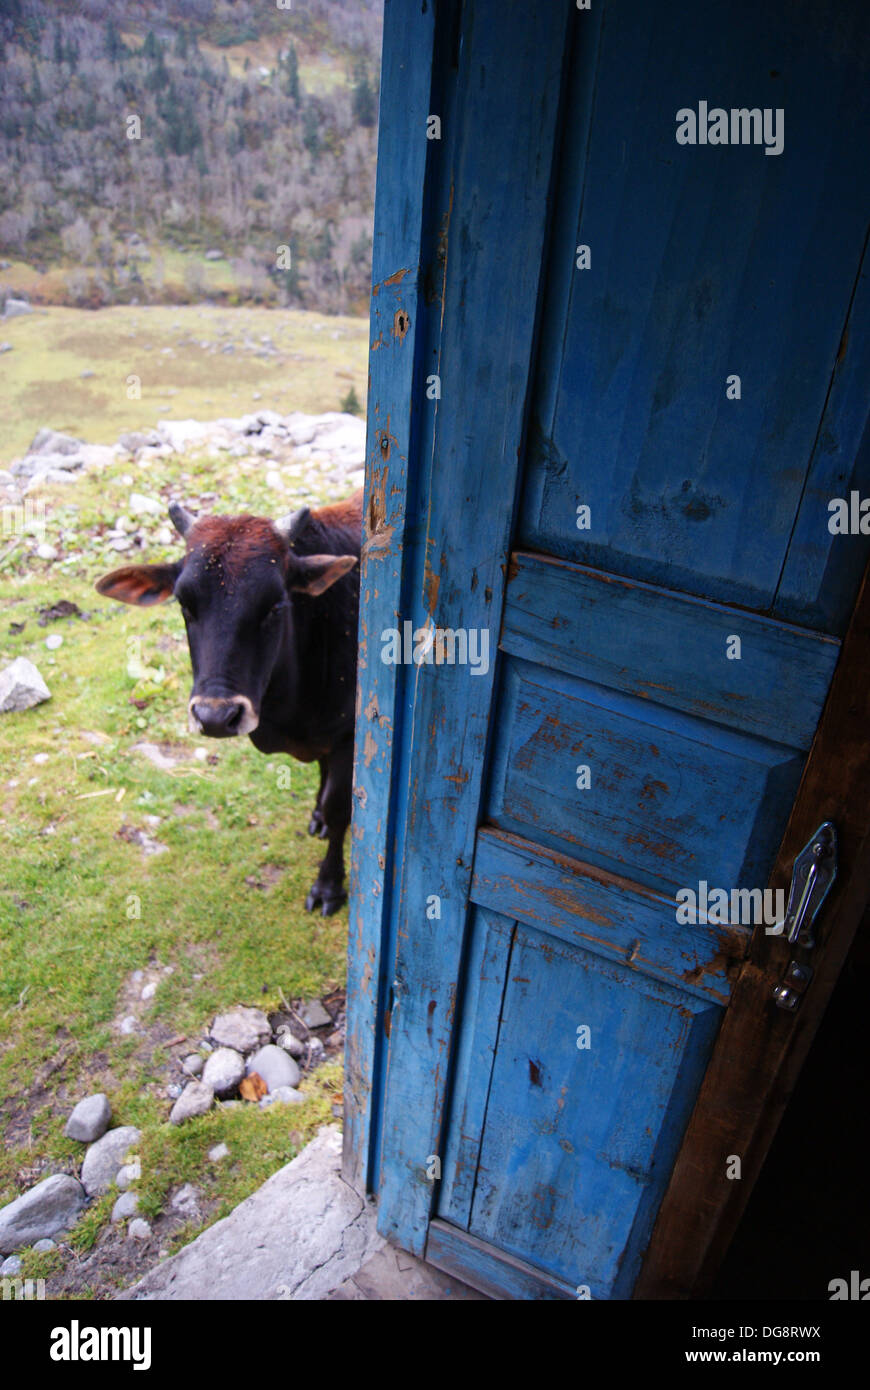 Cow at the doorway in the Har Ki Doon Valley, Uttarakhand, India Stock Photo